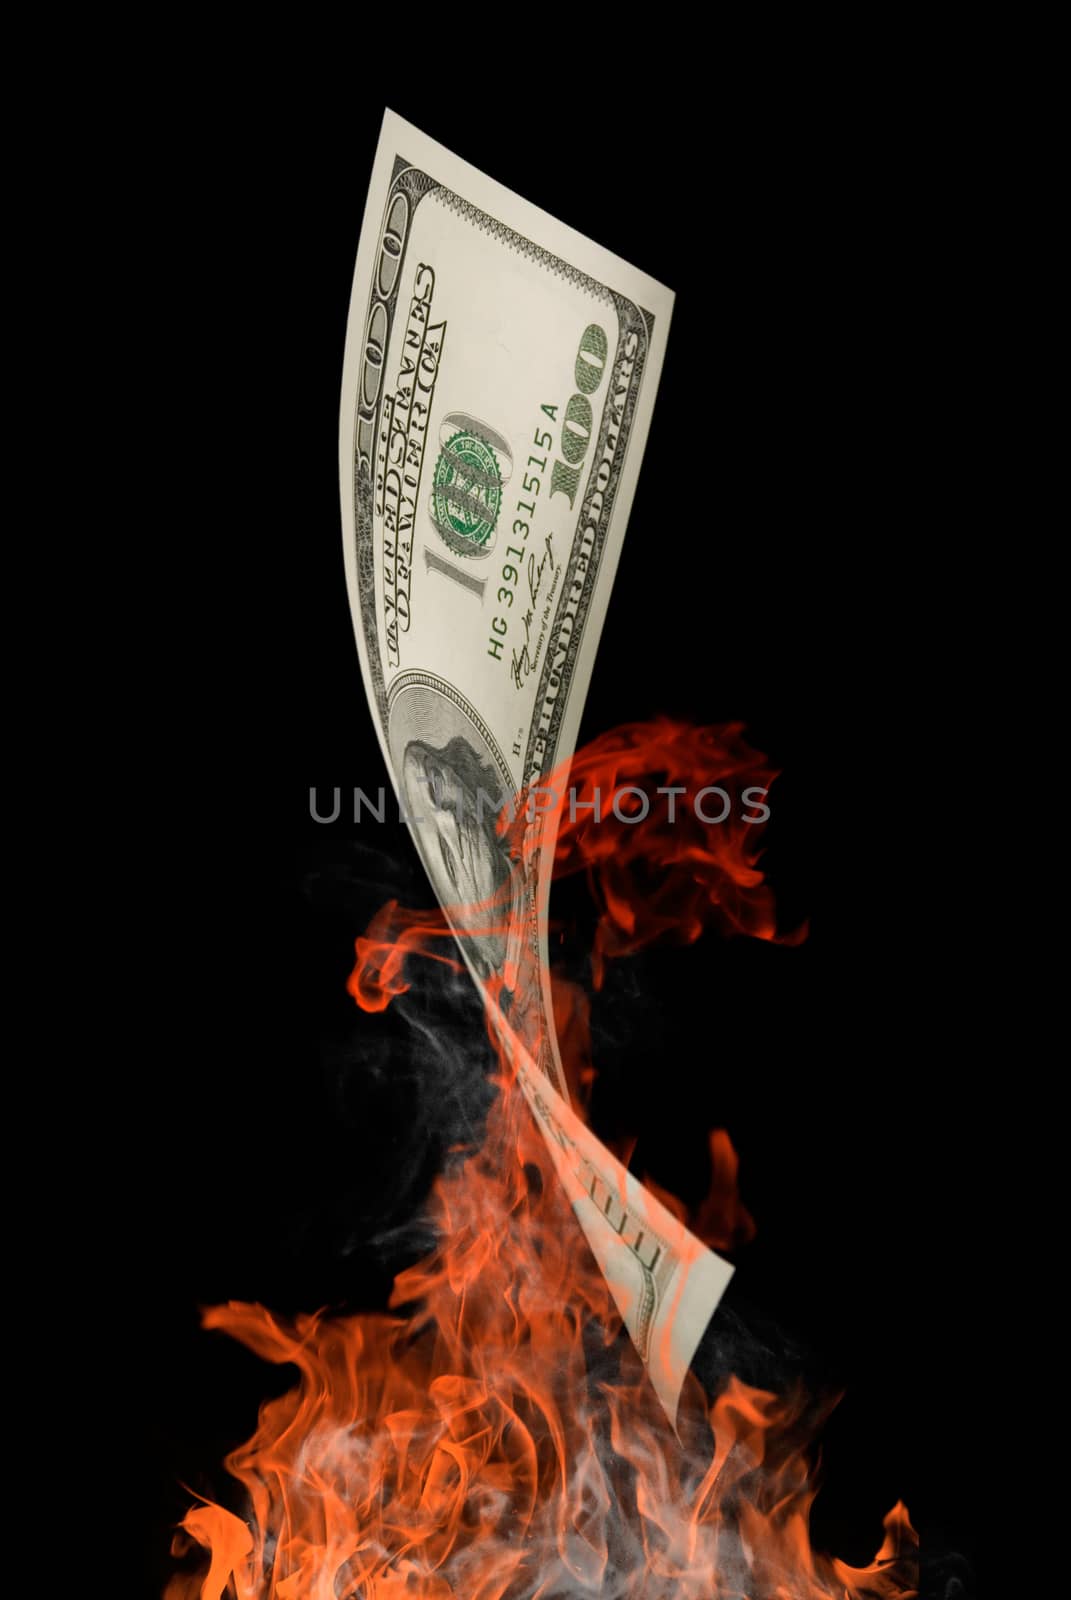 This image - a symbol (bankruptcy, financial crisis).